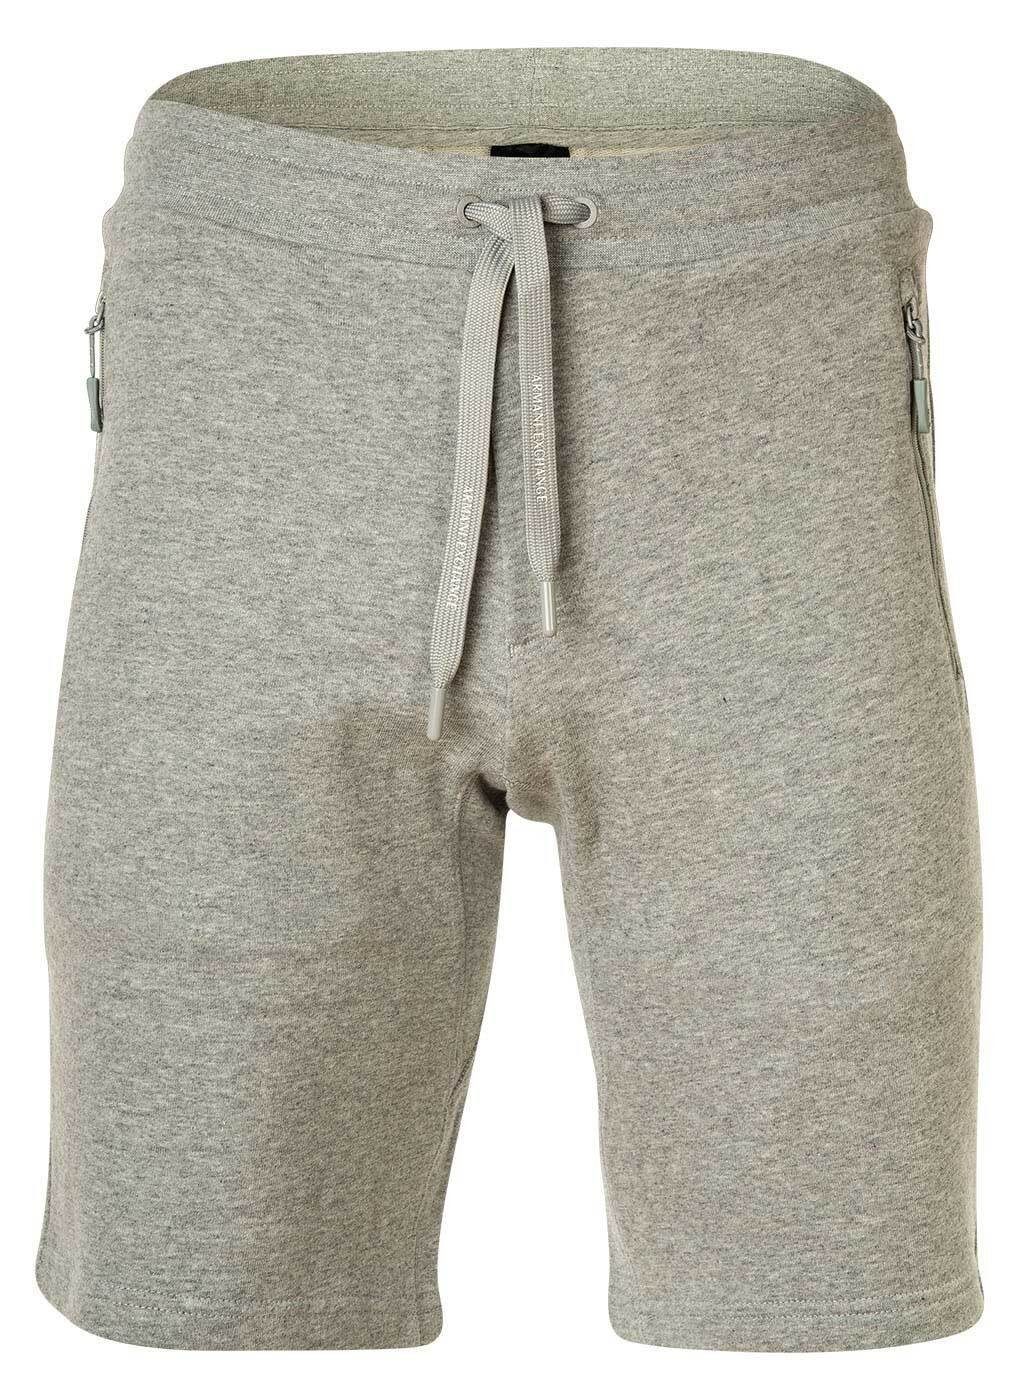 Grau kurz Pants, Sweatshorts EXCHANGE Jogginghose ARMANI - Herren Loungewear